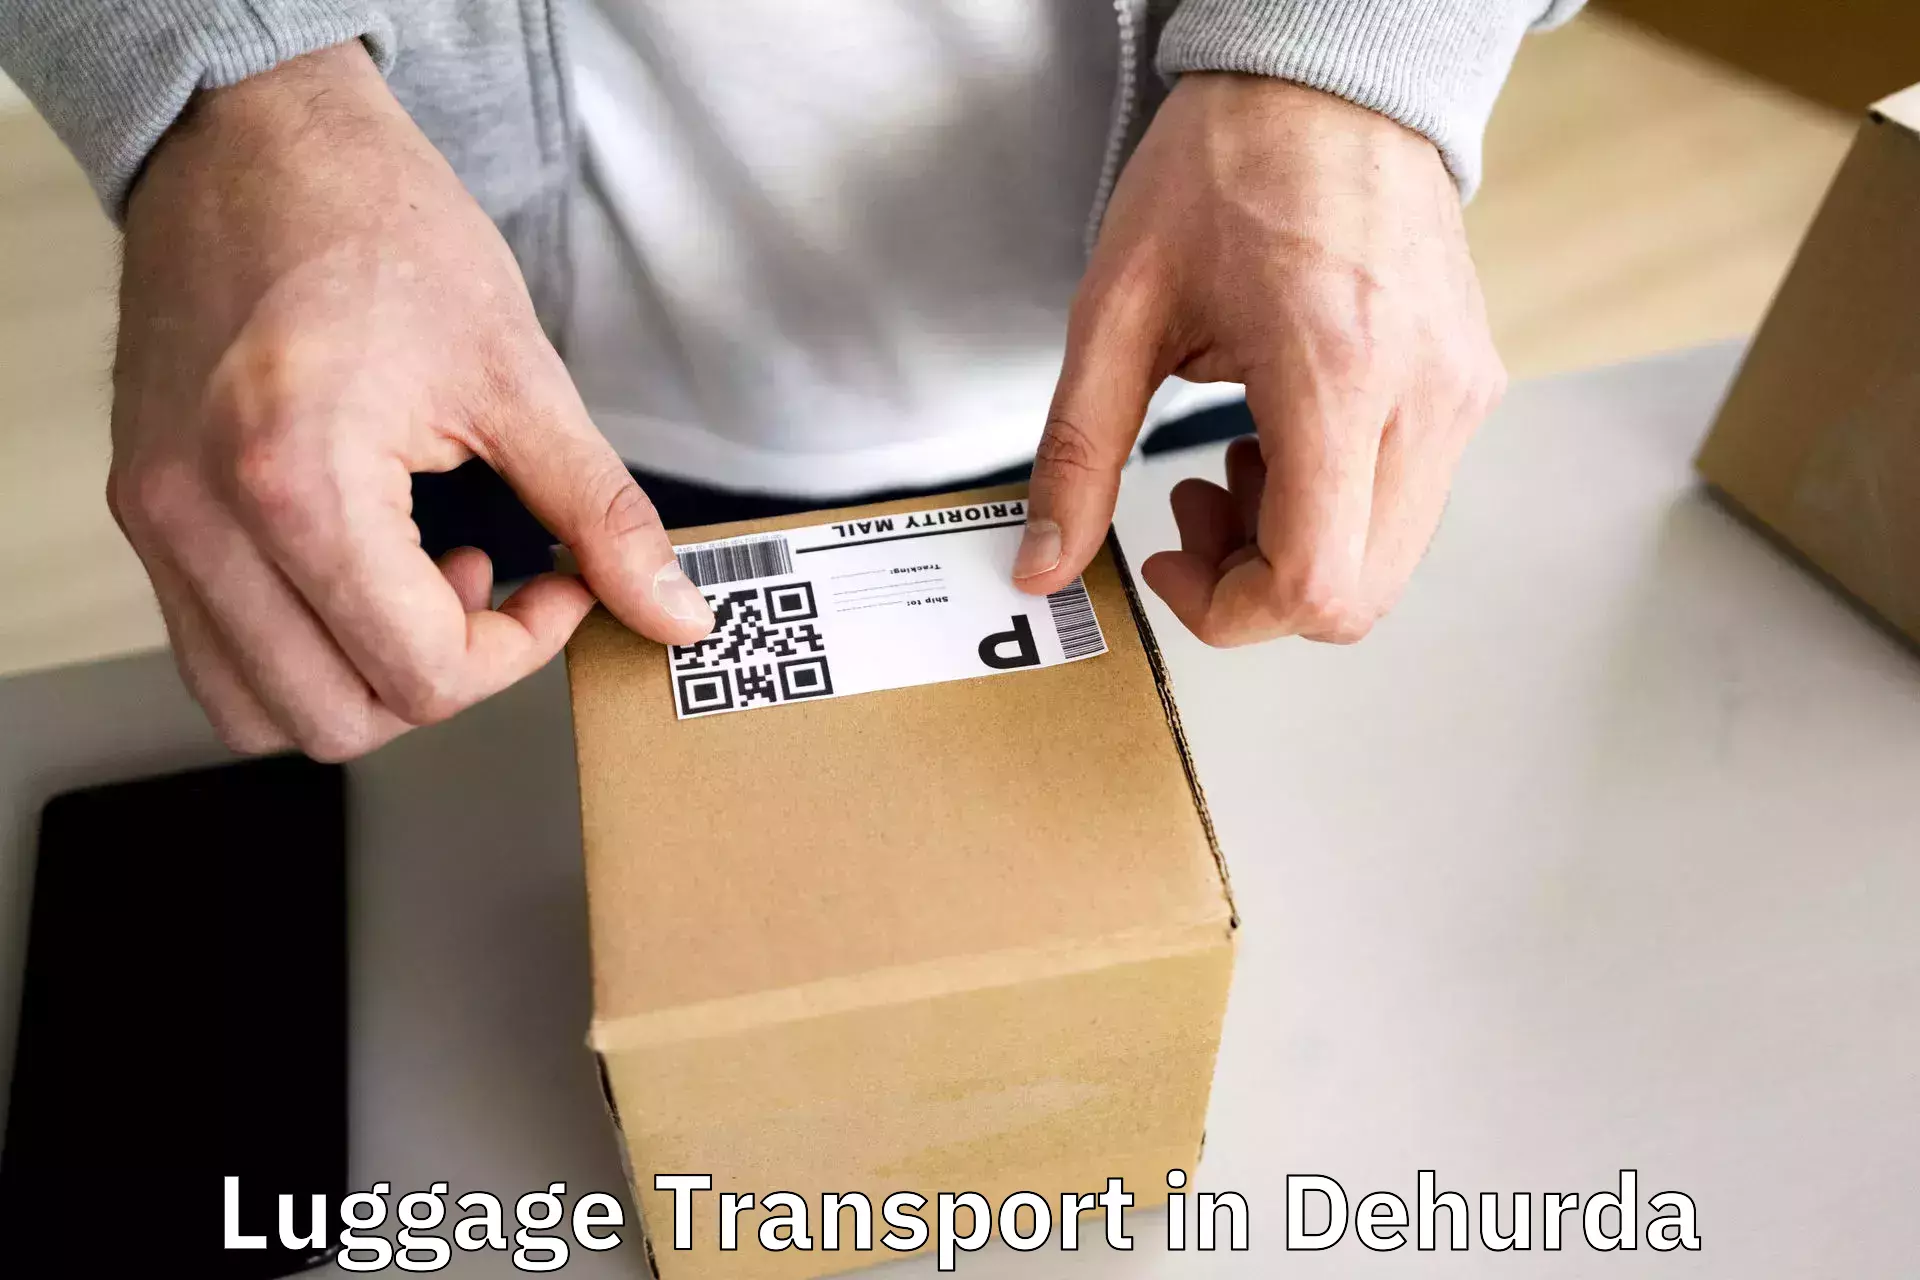 Urgent luggage shipment in Dehurda